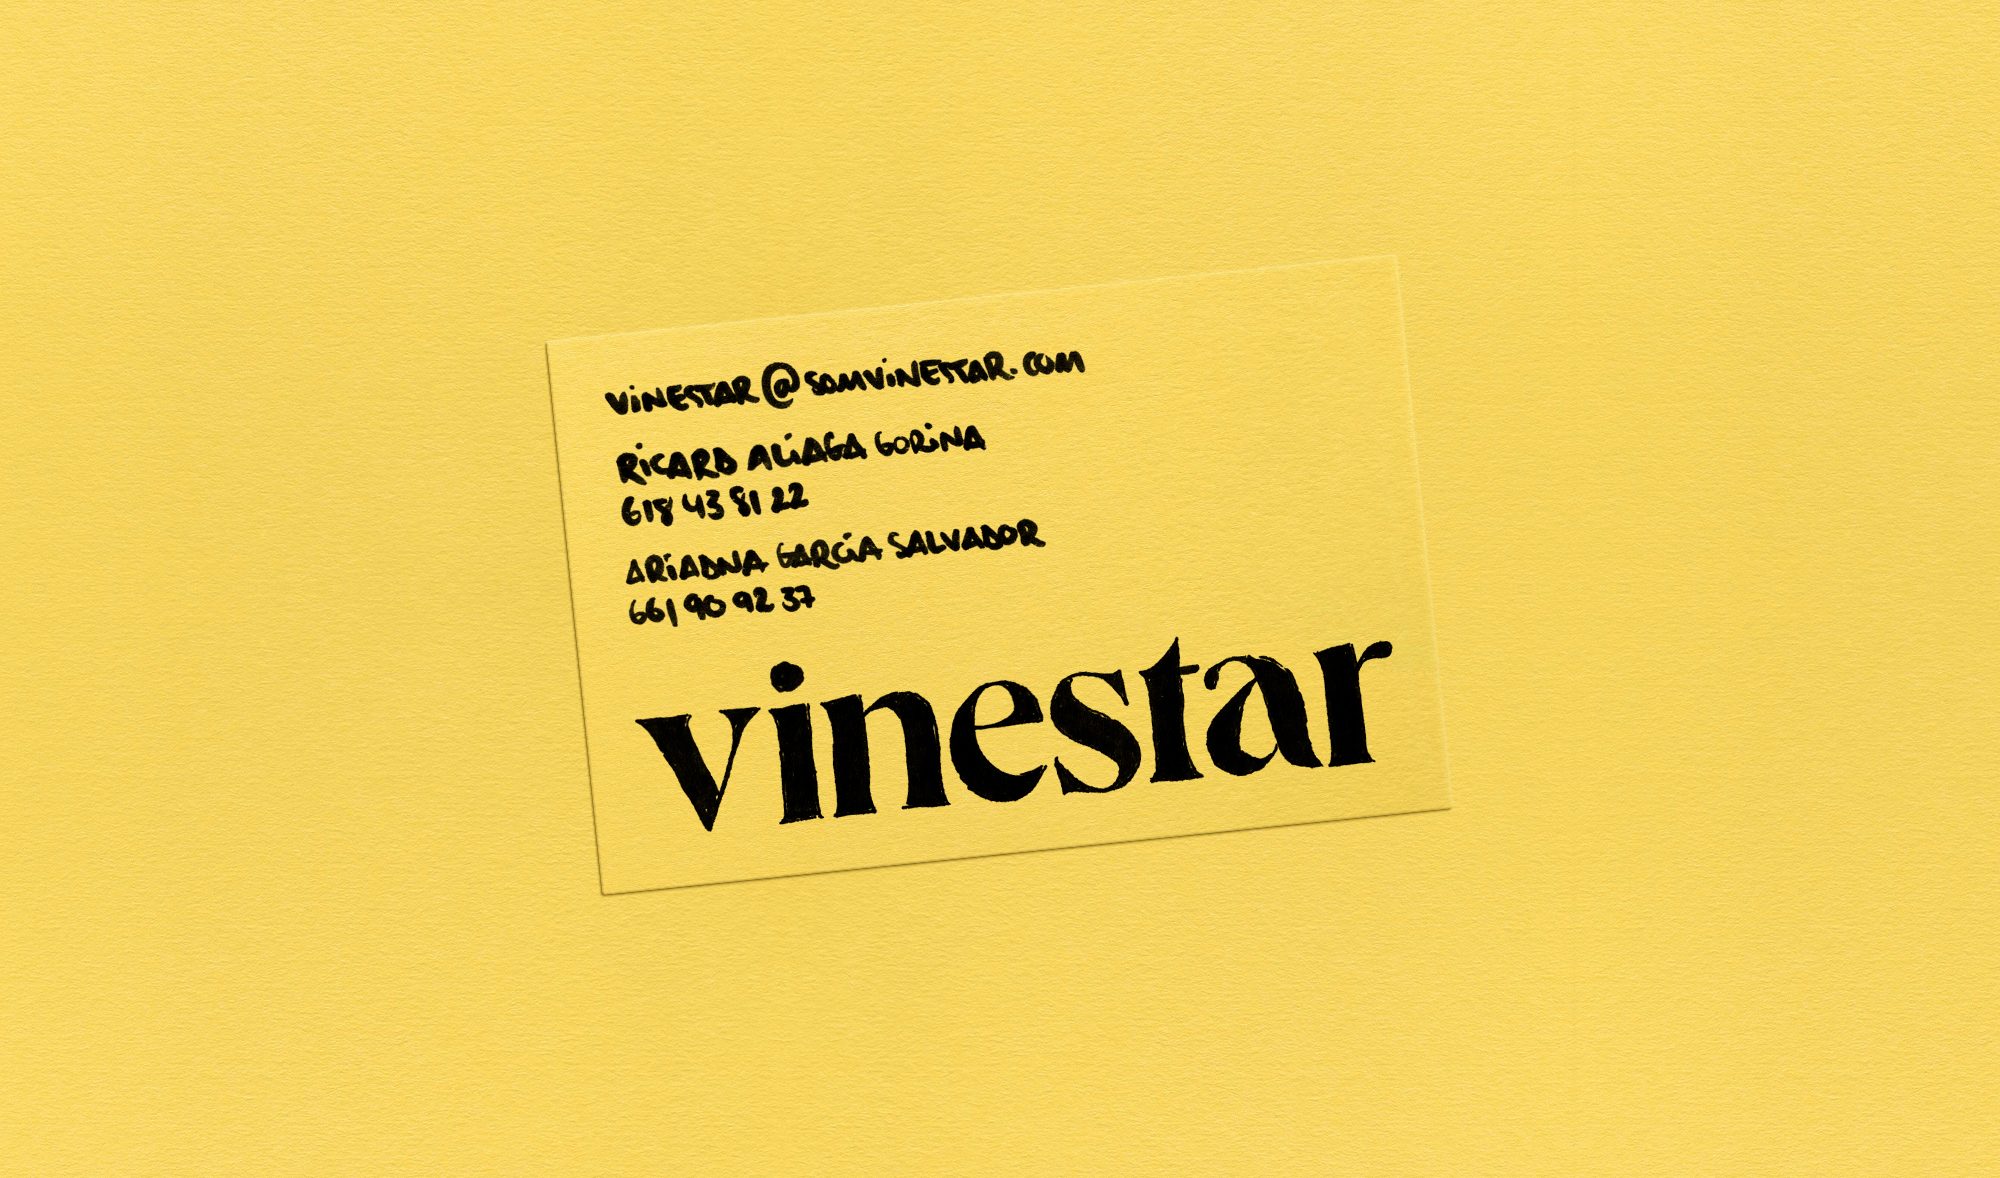 Business card Vinestar